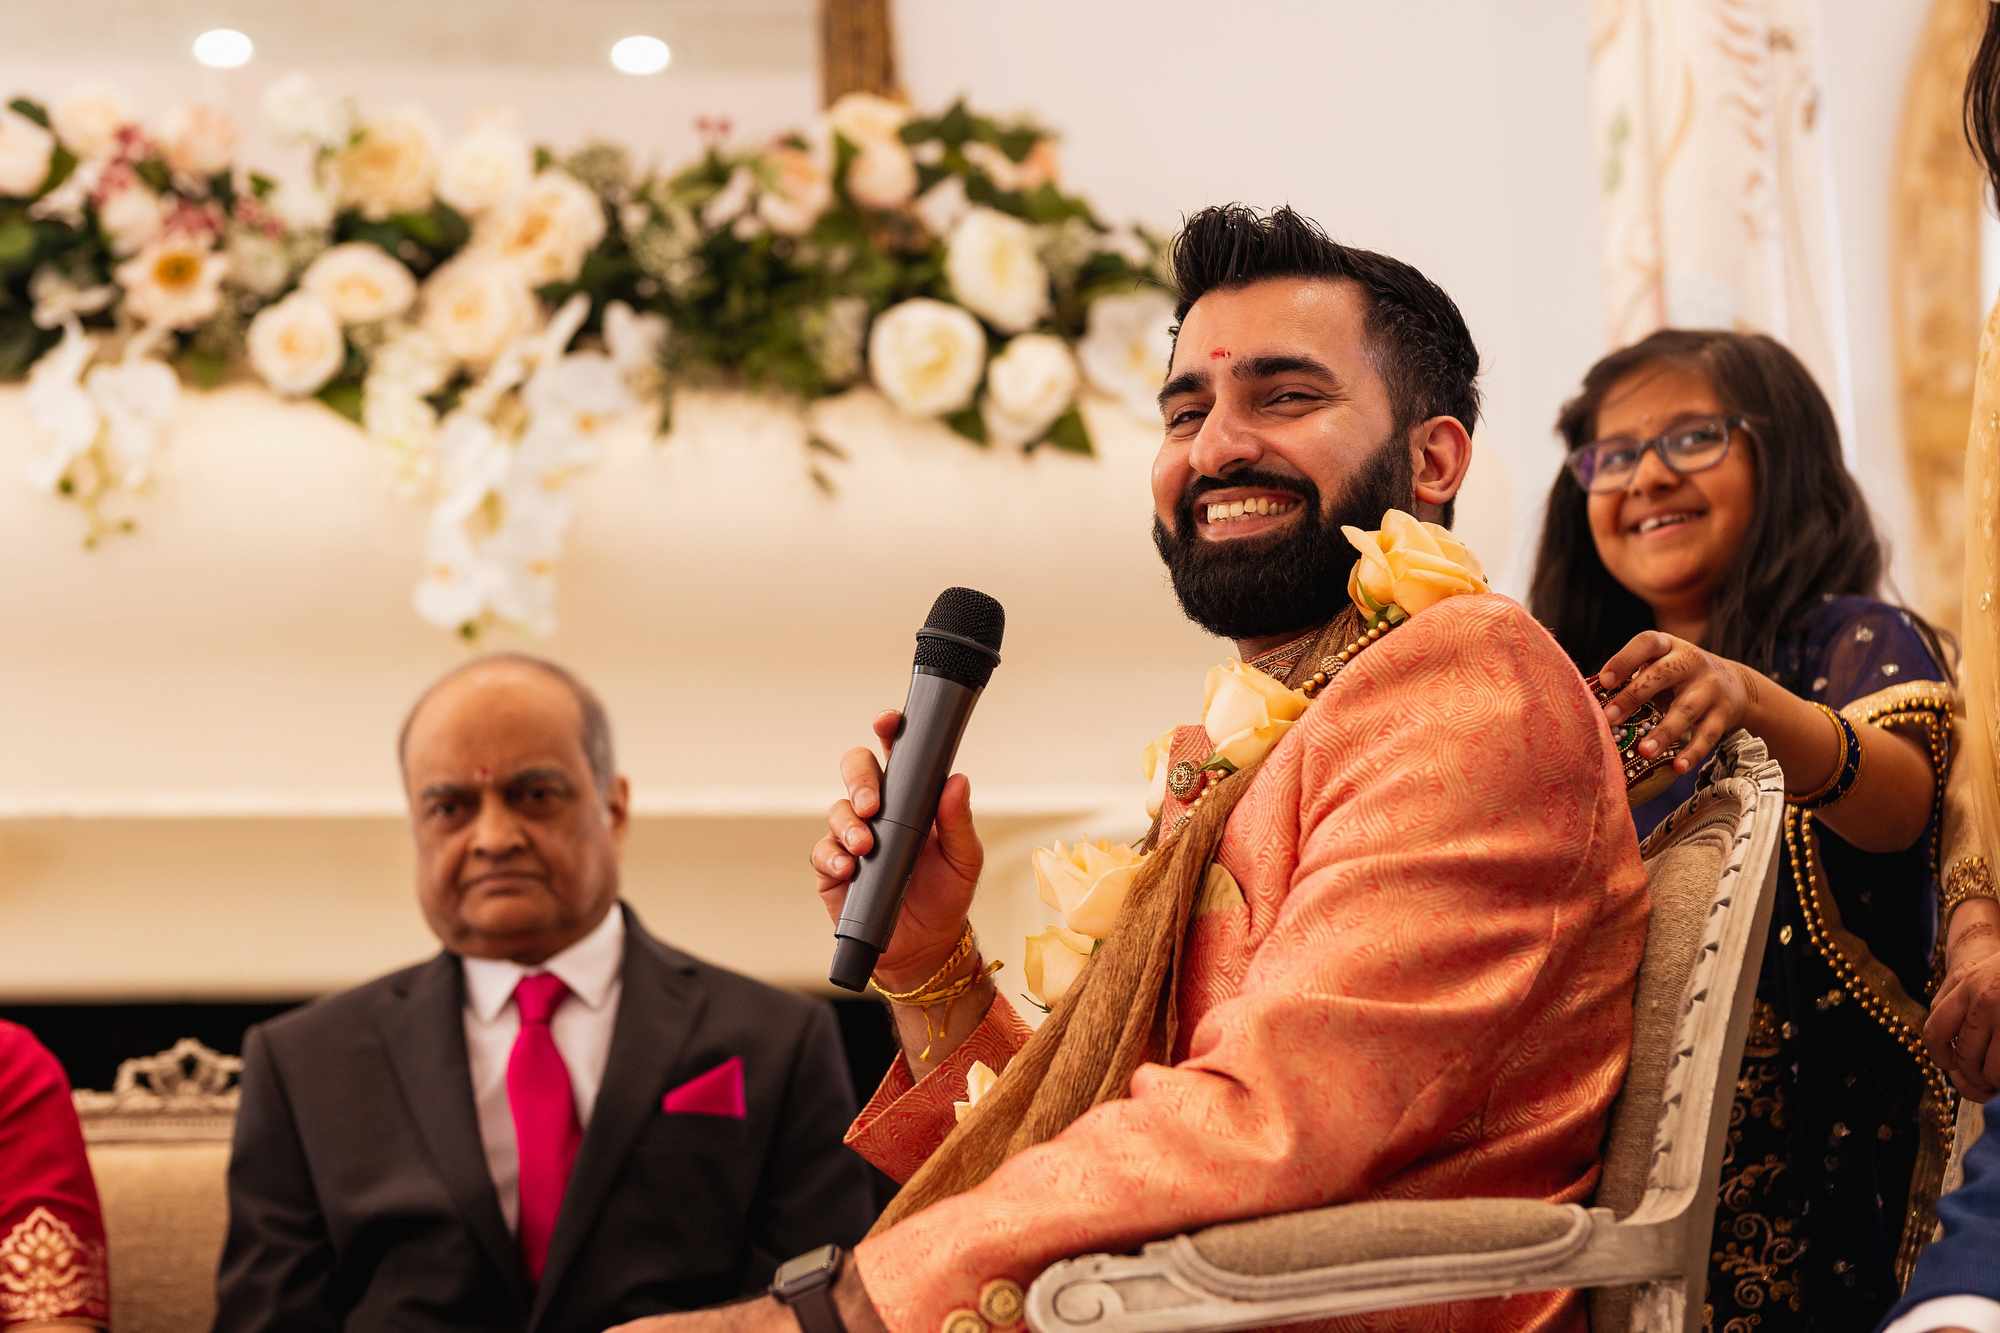 Northbrook Park in Surrey, Asian Wedding Photographer, Hindu wedding ceremony